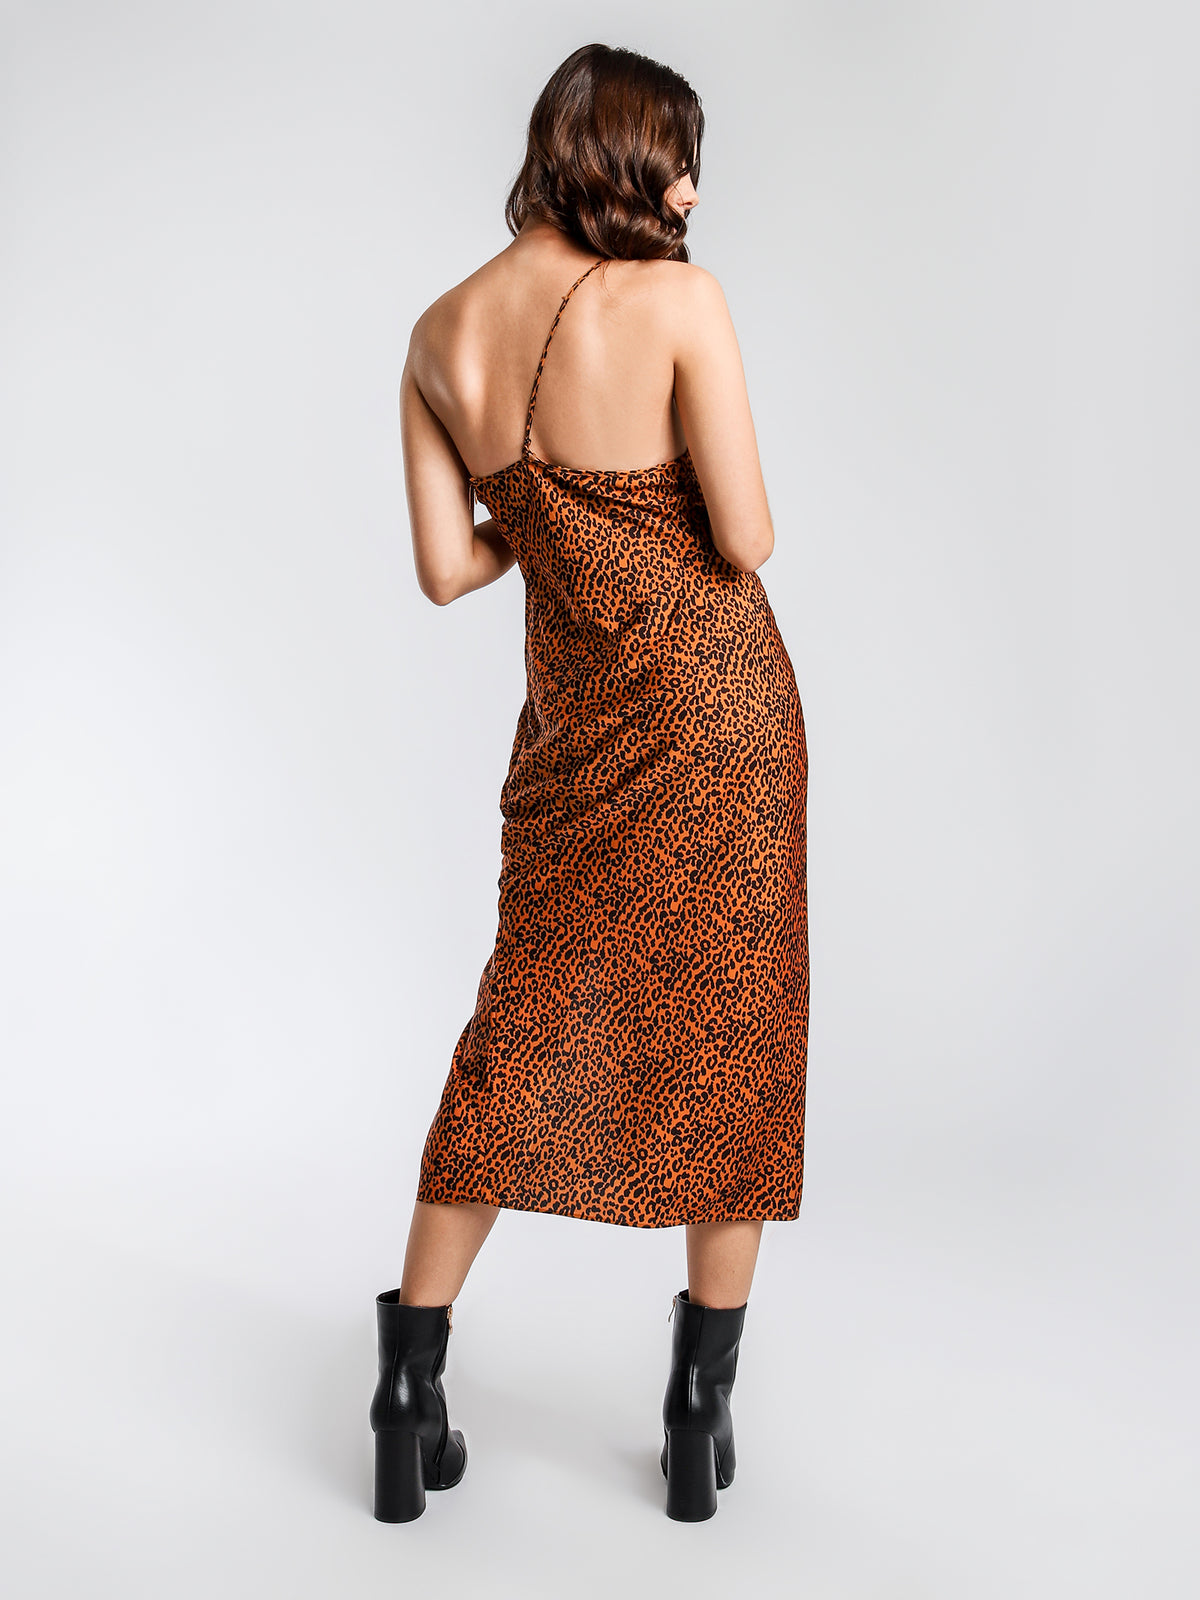 Sahara Asymmetric Strap Midi-Dress in Leopard Print